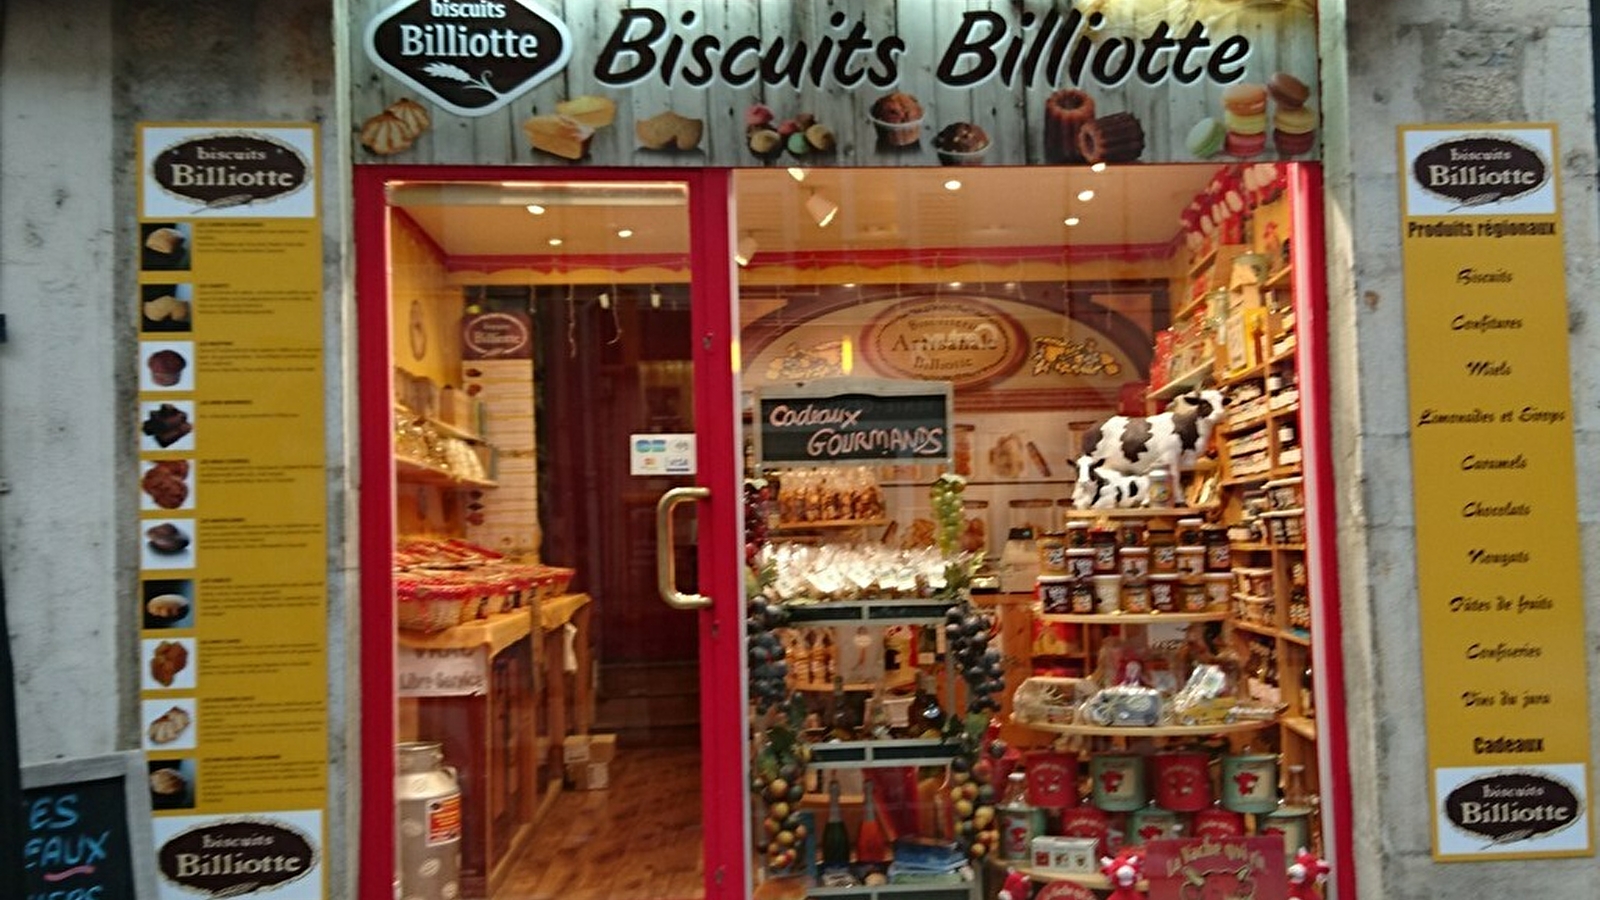 Biscuiterie artisanale Billiotte - Comptoir des gourmandises